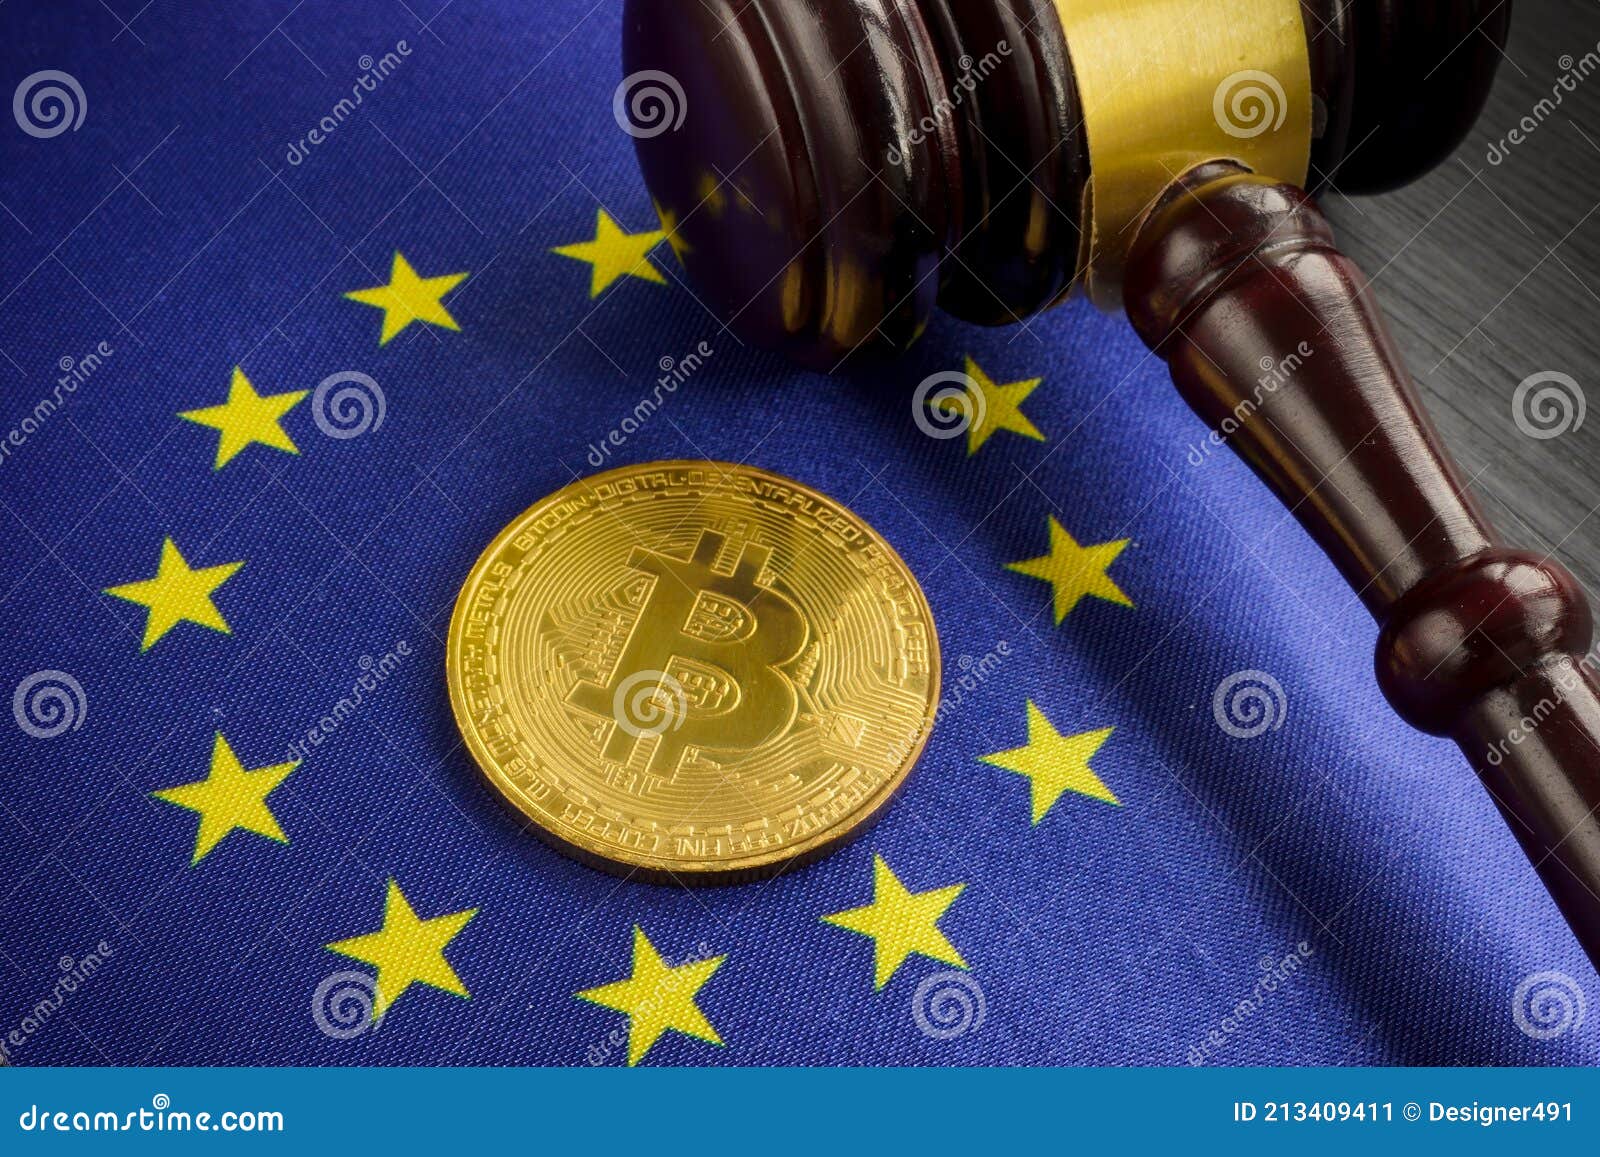 eu cryptocurrency regulation